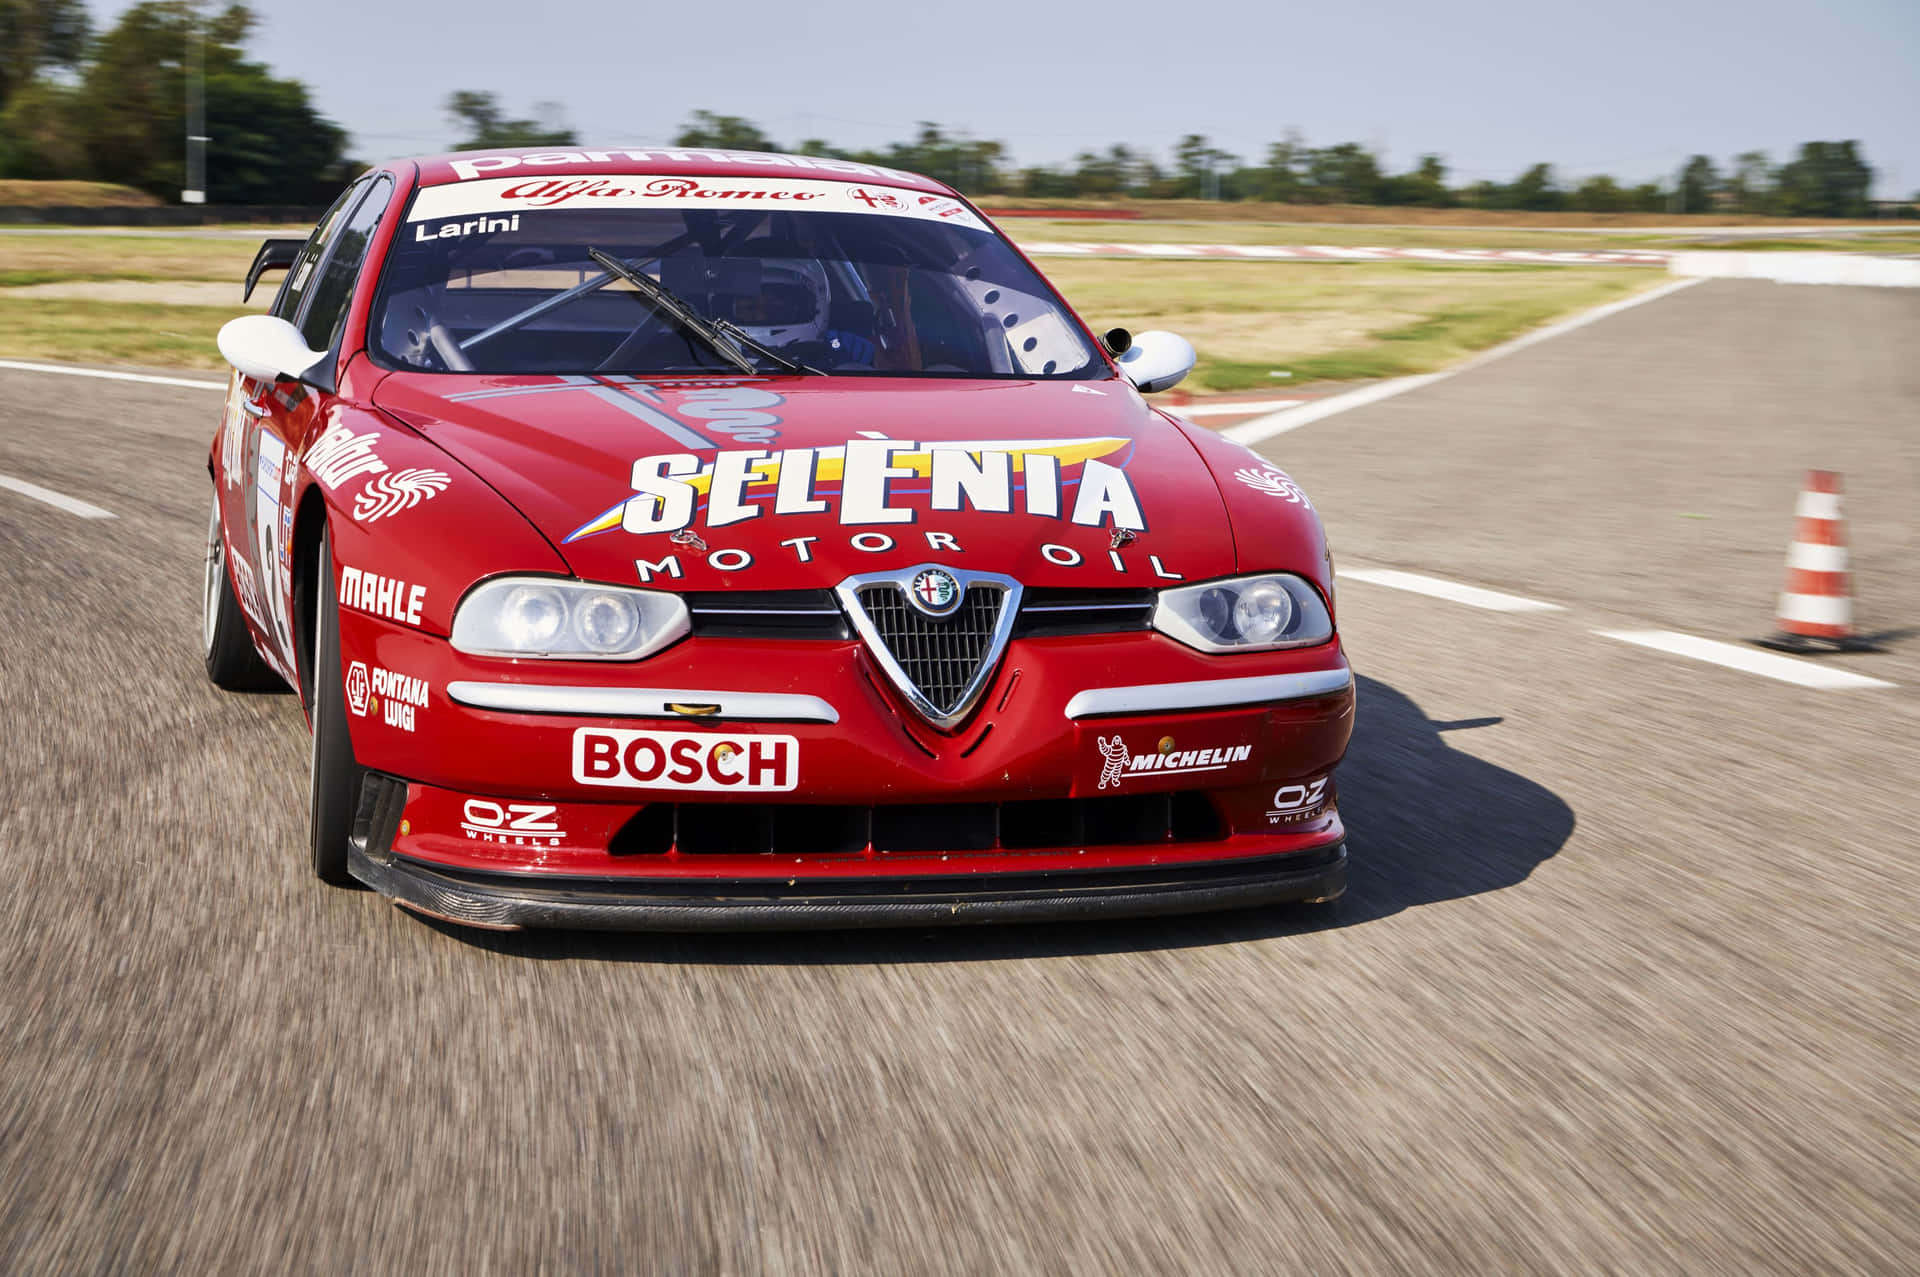 Stunning Alfa Romeo 156 in Action Wallpaper